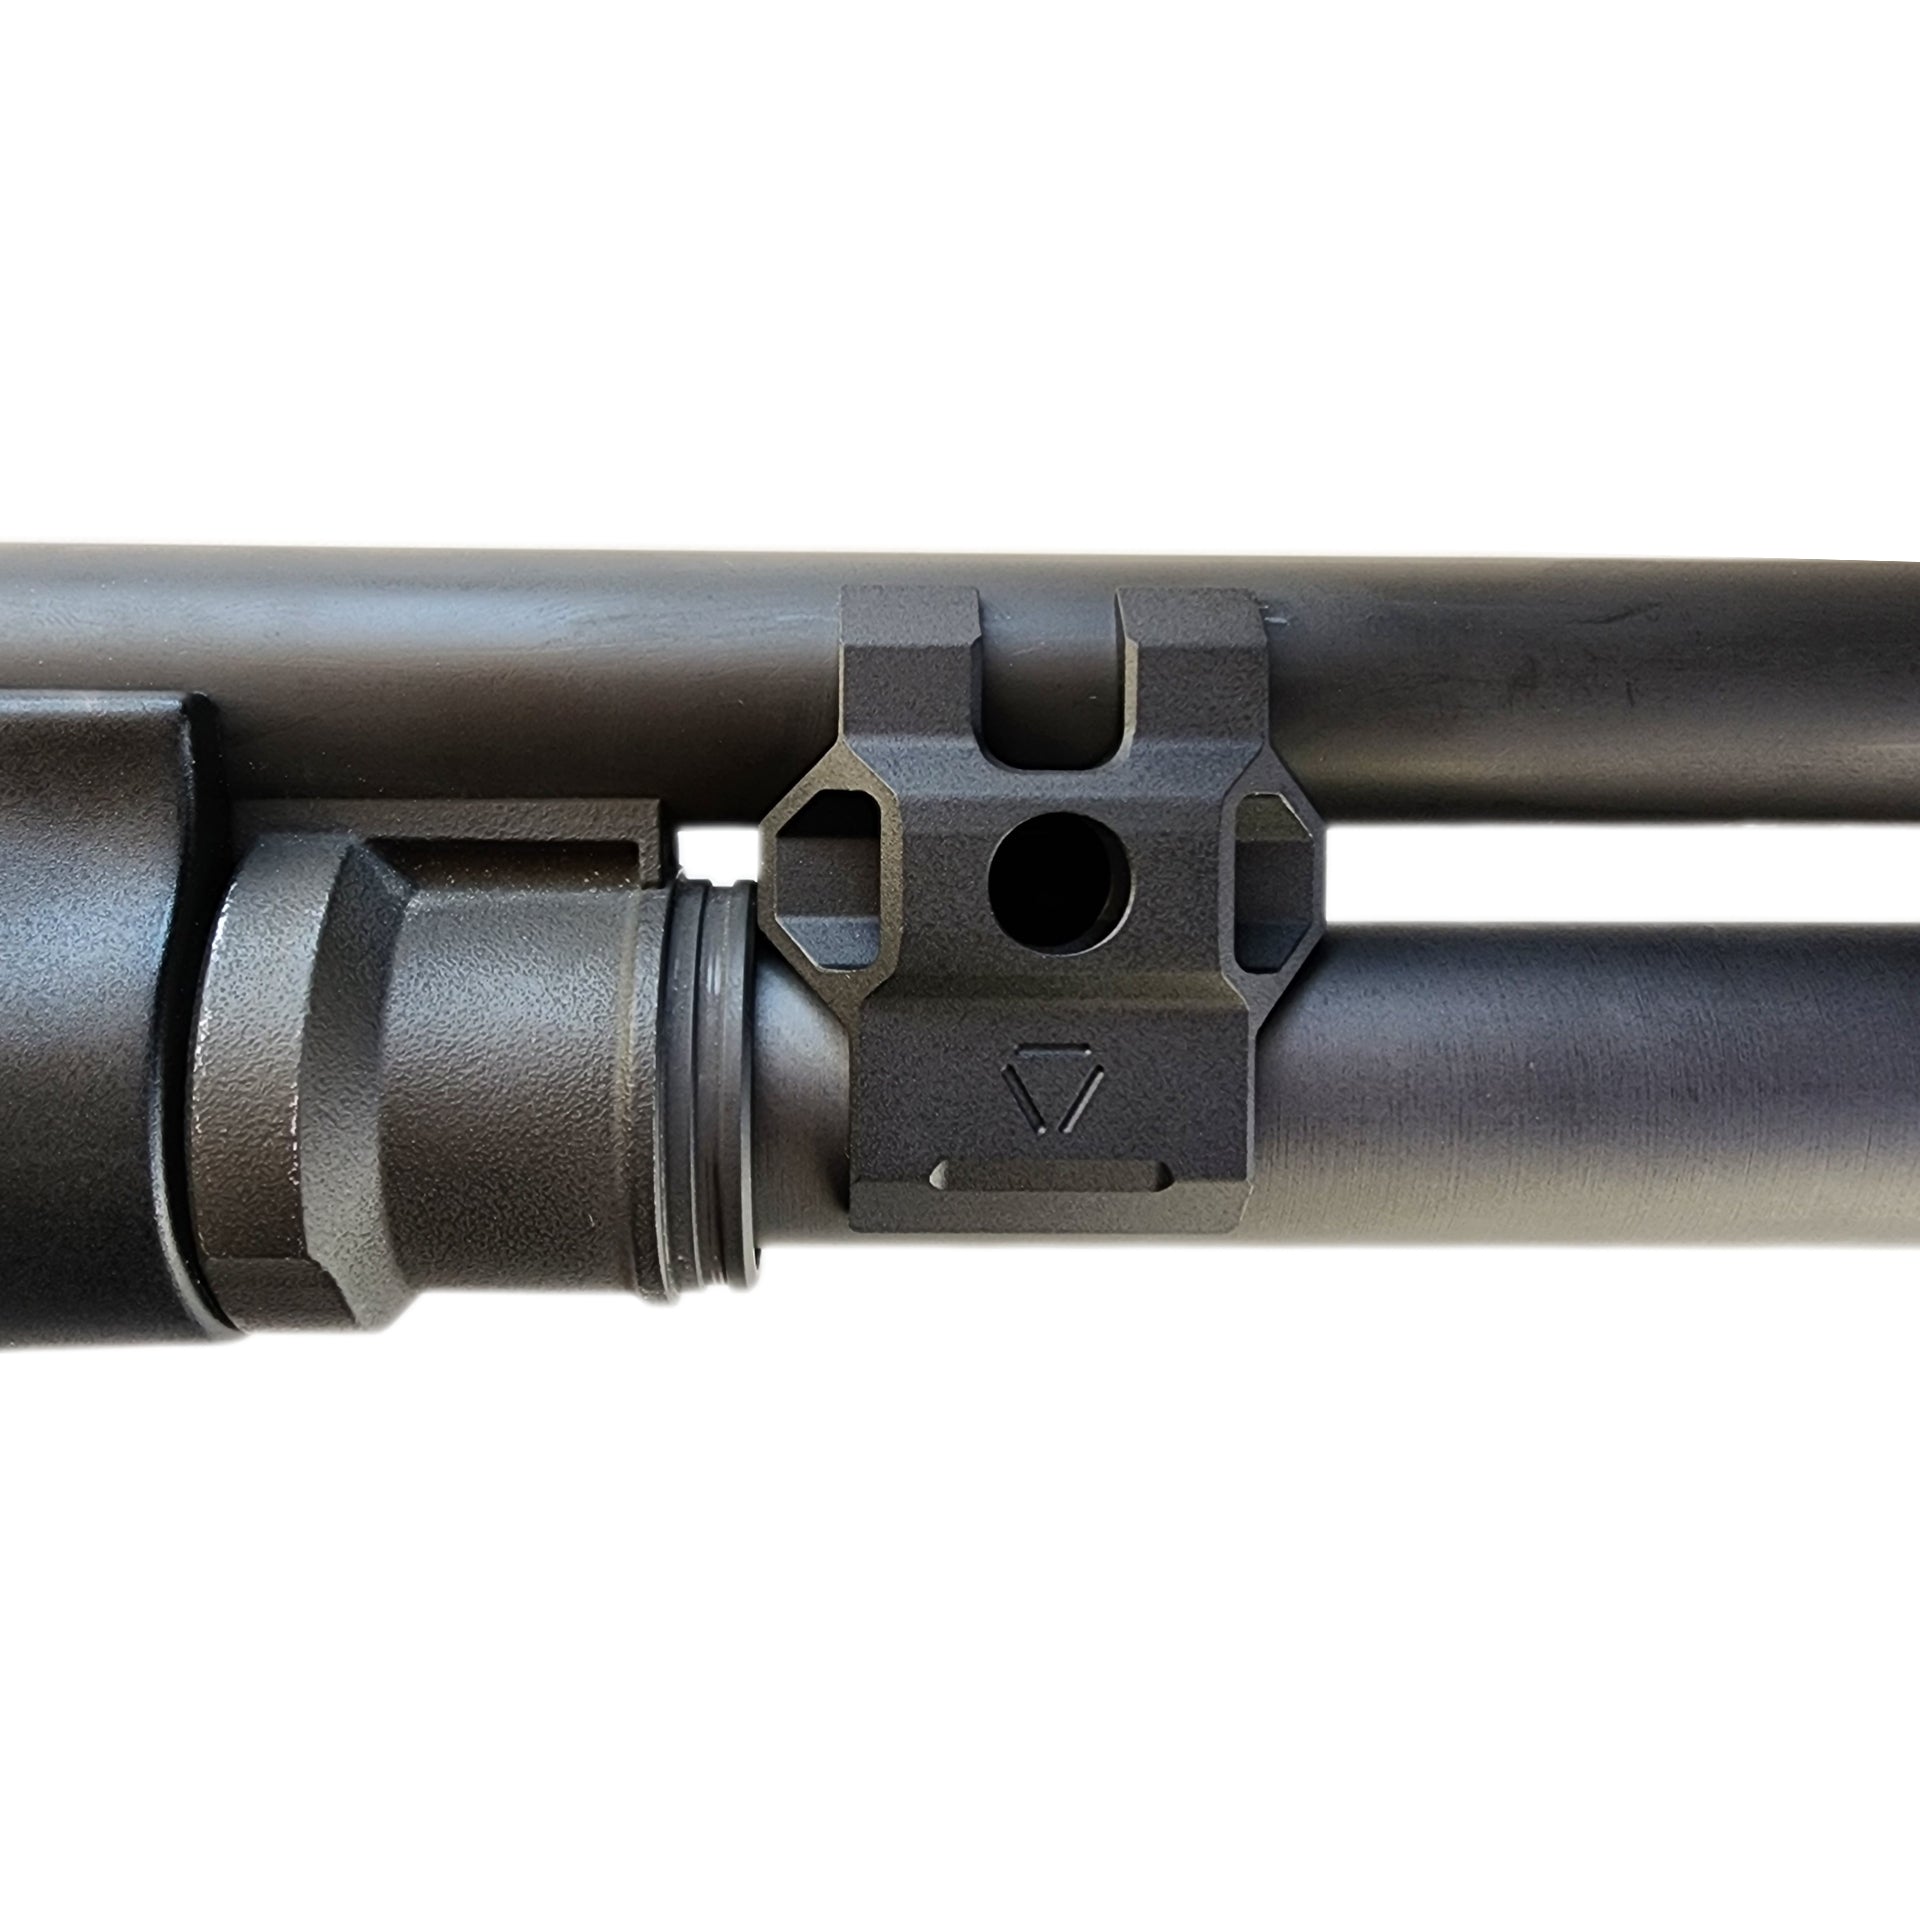 Benelli M4 Light Mount Shotgun